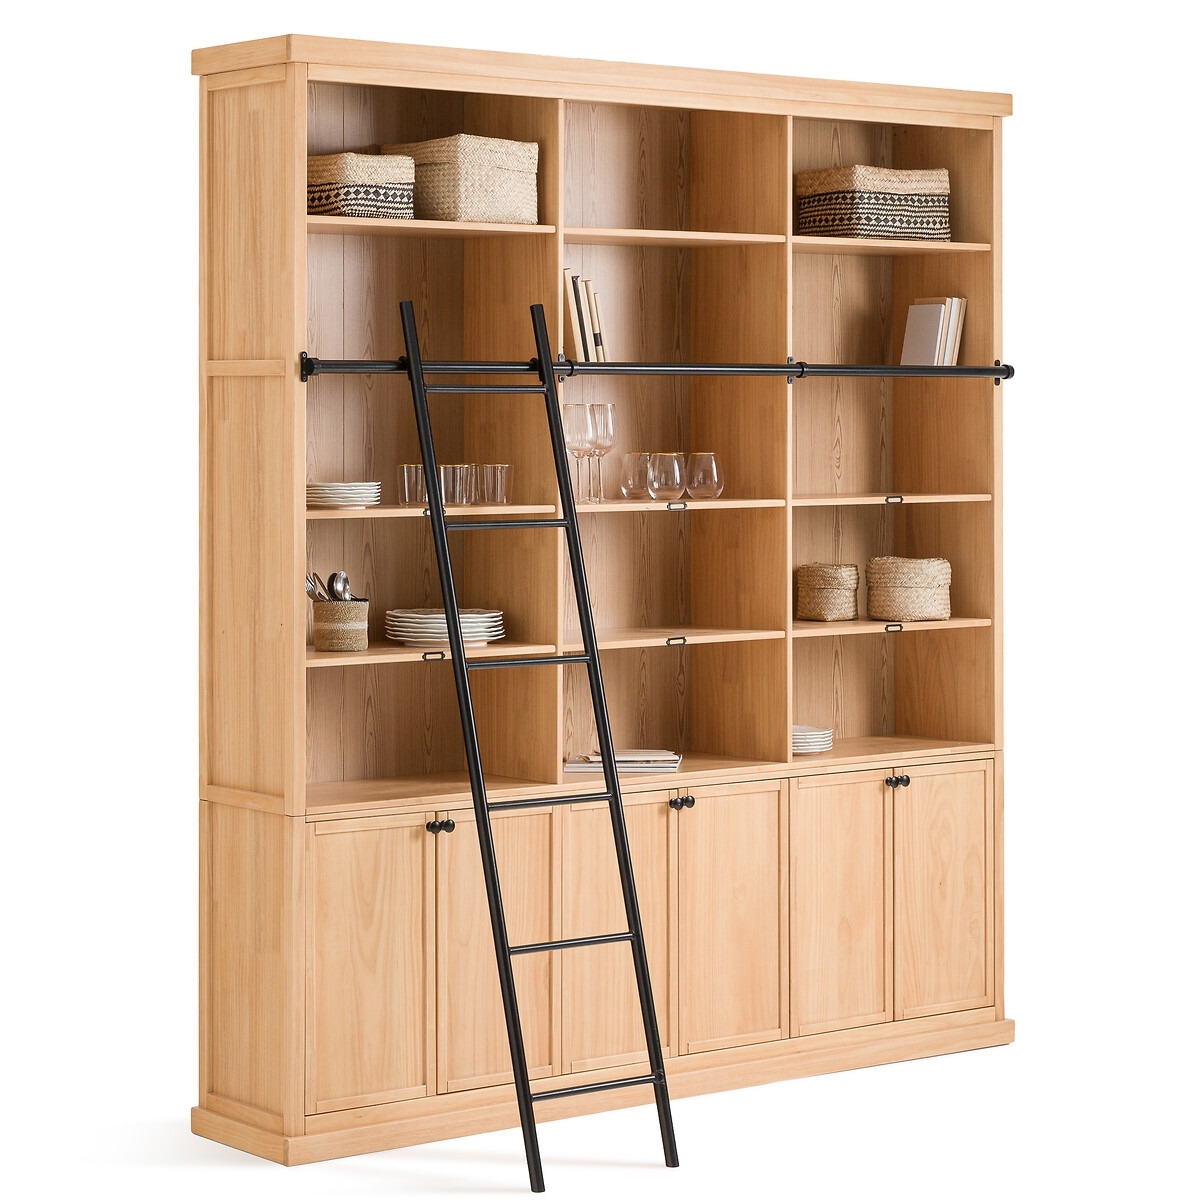 Gabin Pine Bookcase with Ladder - image 1